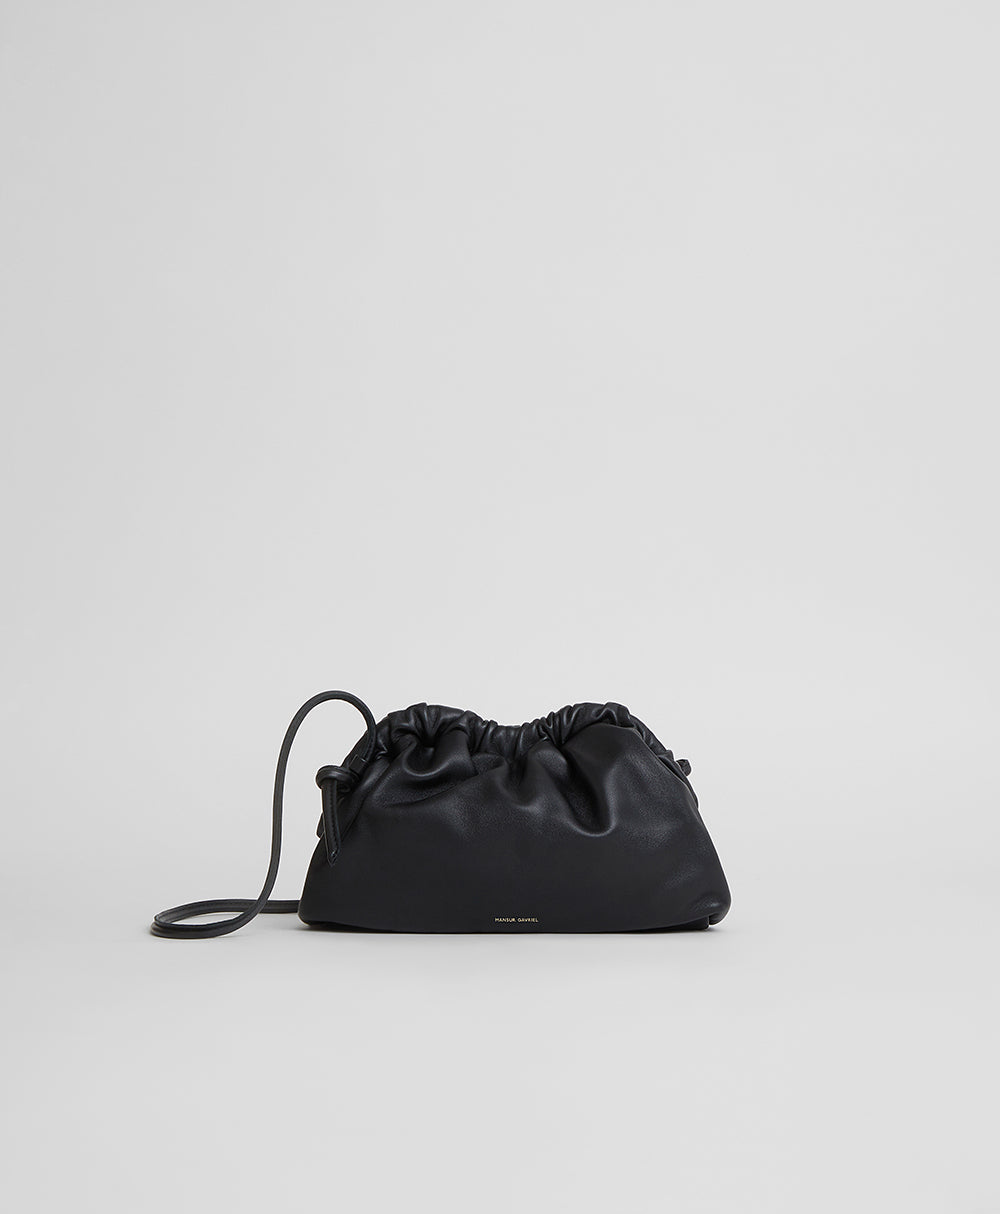 Mansur Gavriel Black/Flamma Saffiano Leather Mini Mini Bucket Bag